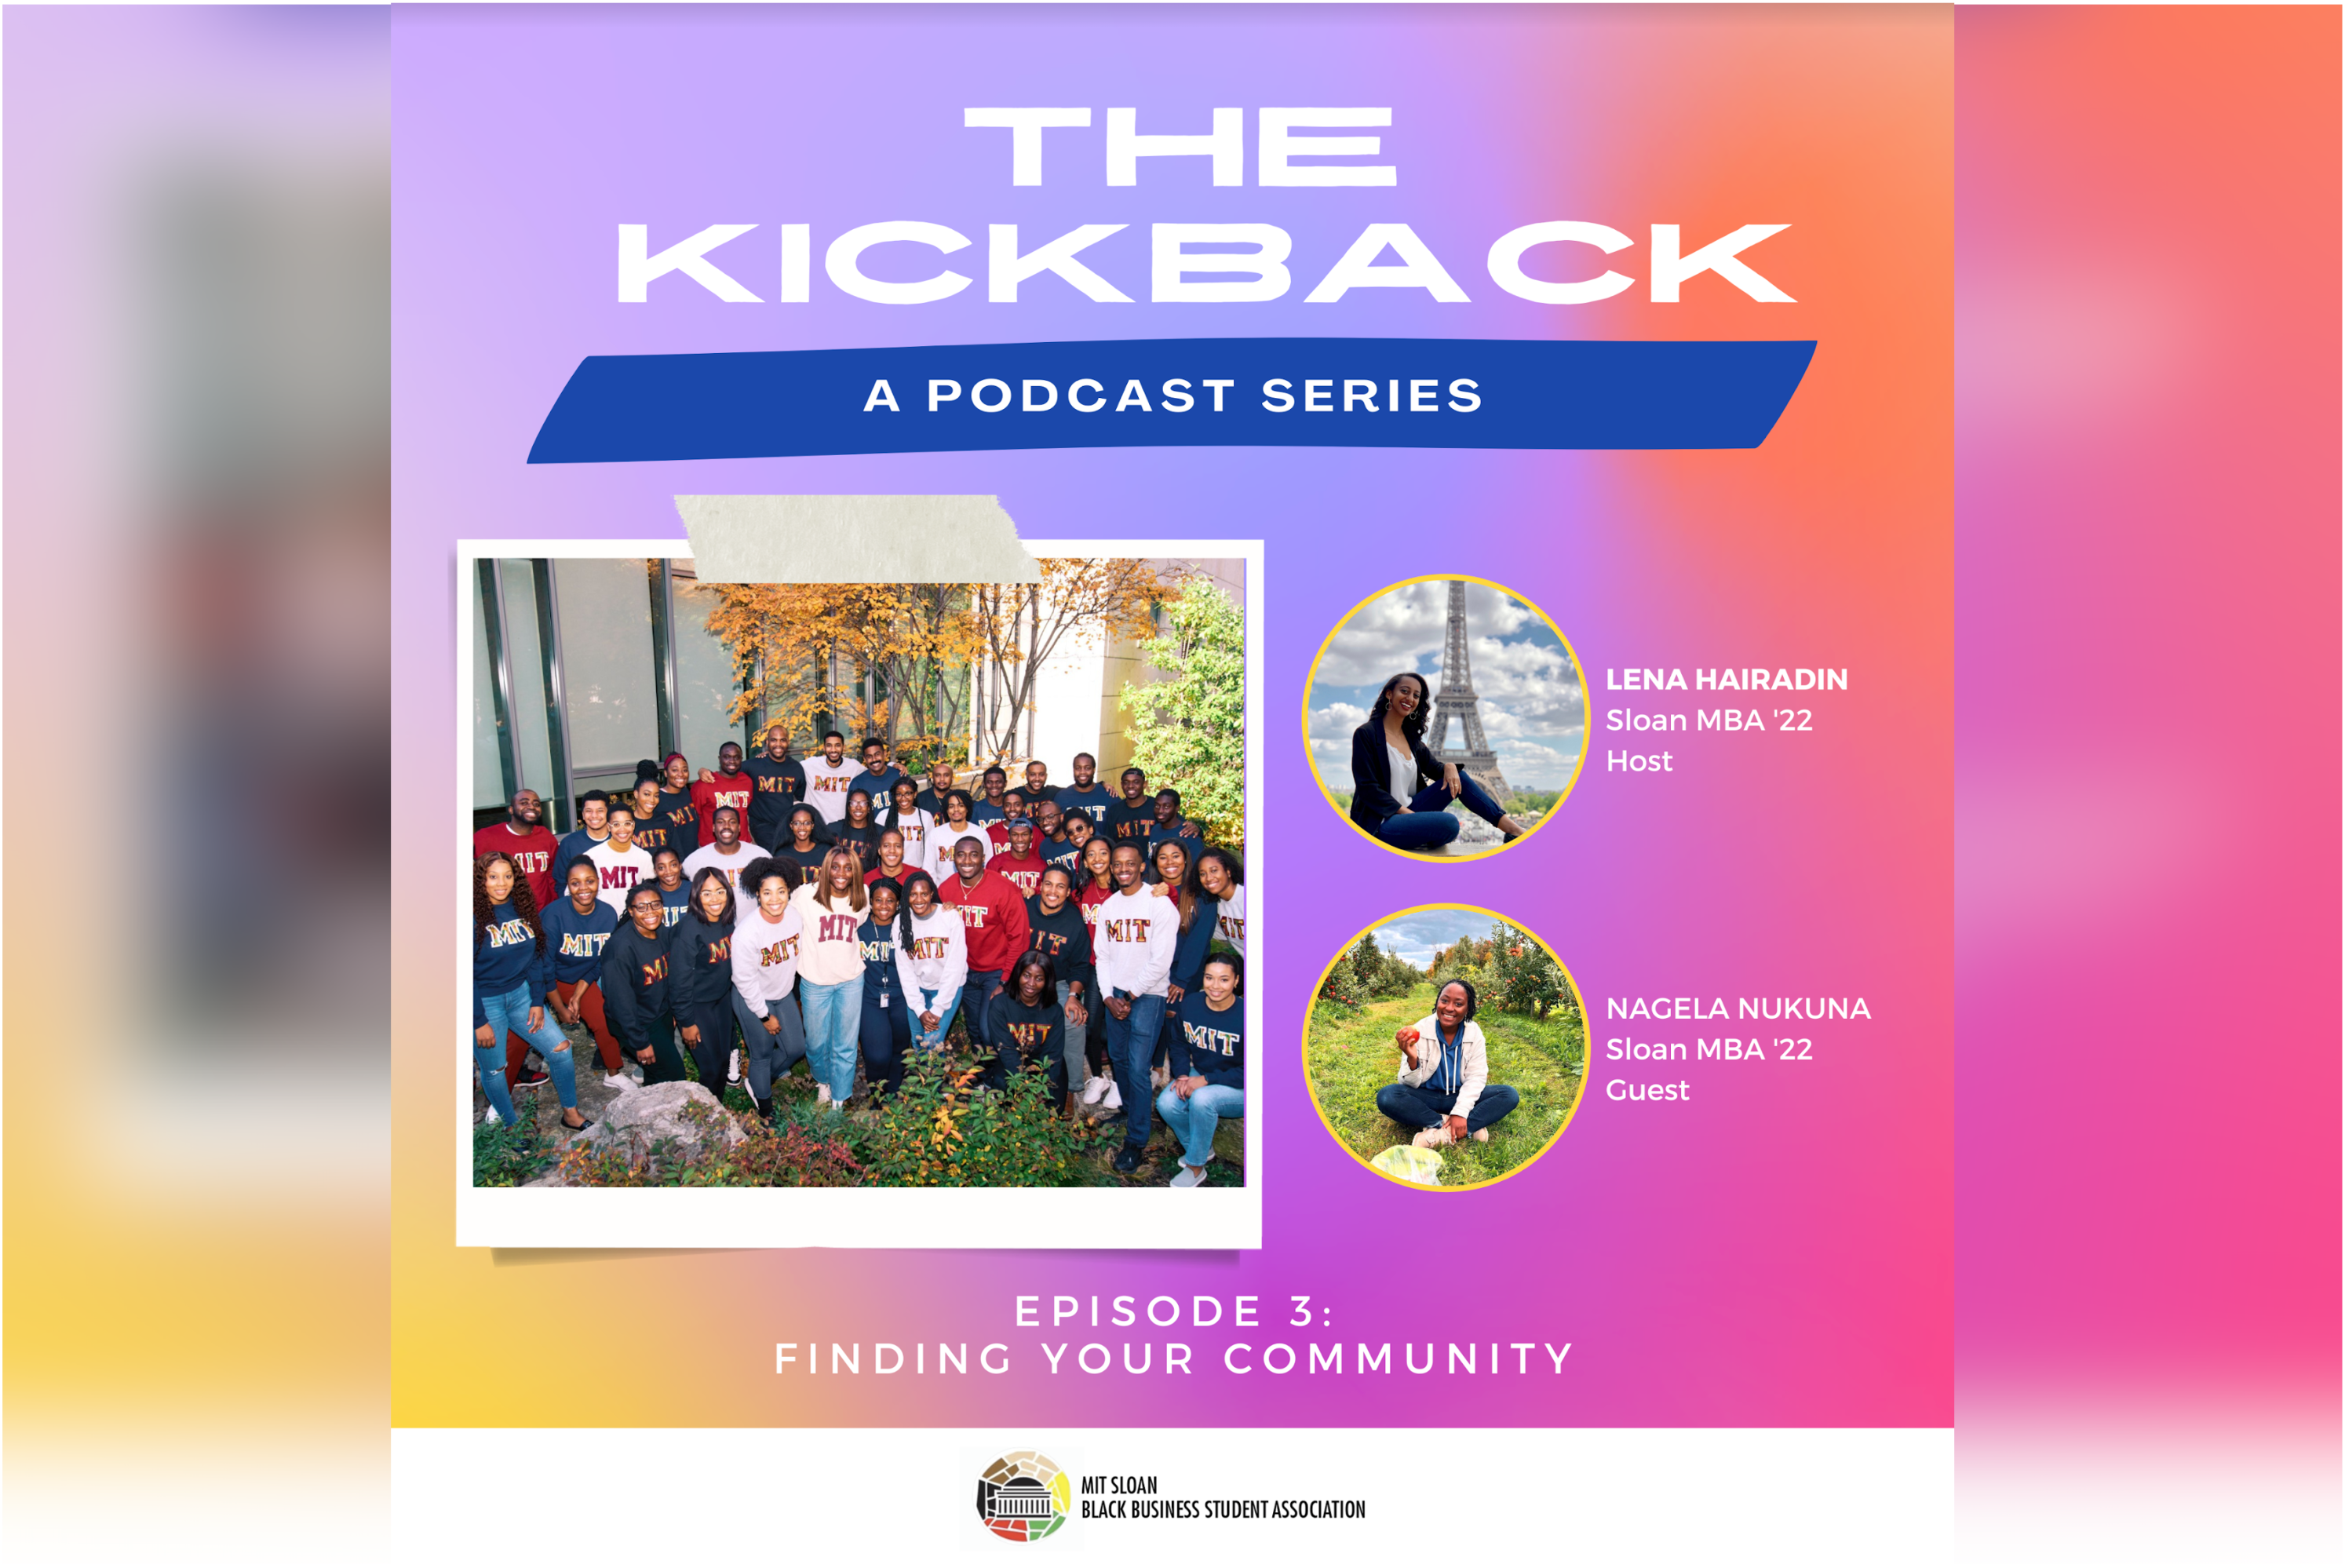 Kickback Podcast Series: Episode 3